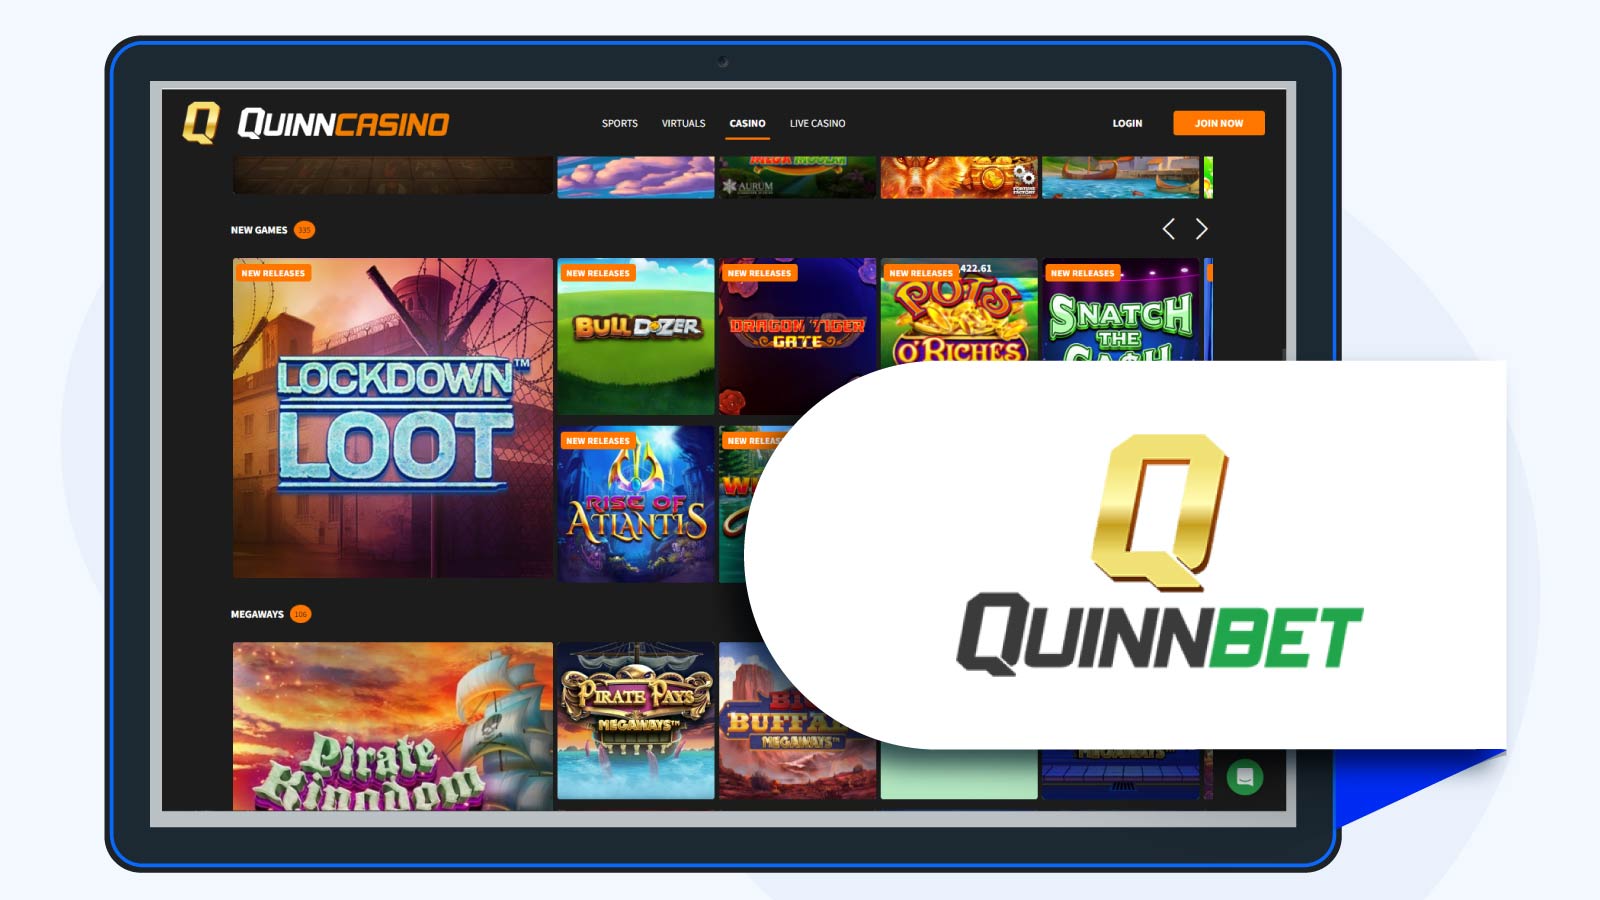 QuinnBet Casino – Deposit £10 Get 10 Wager-Free Spins